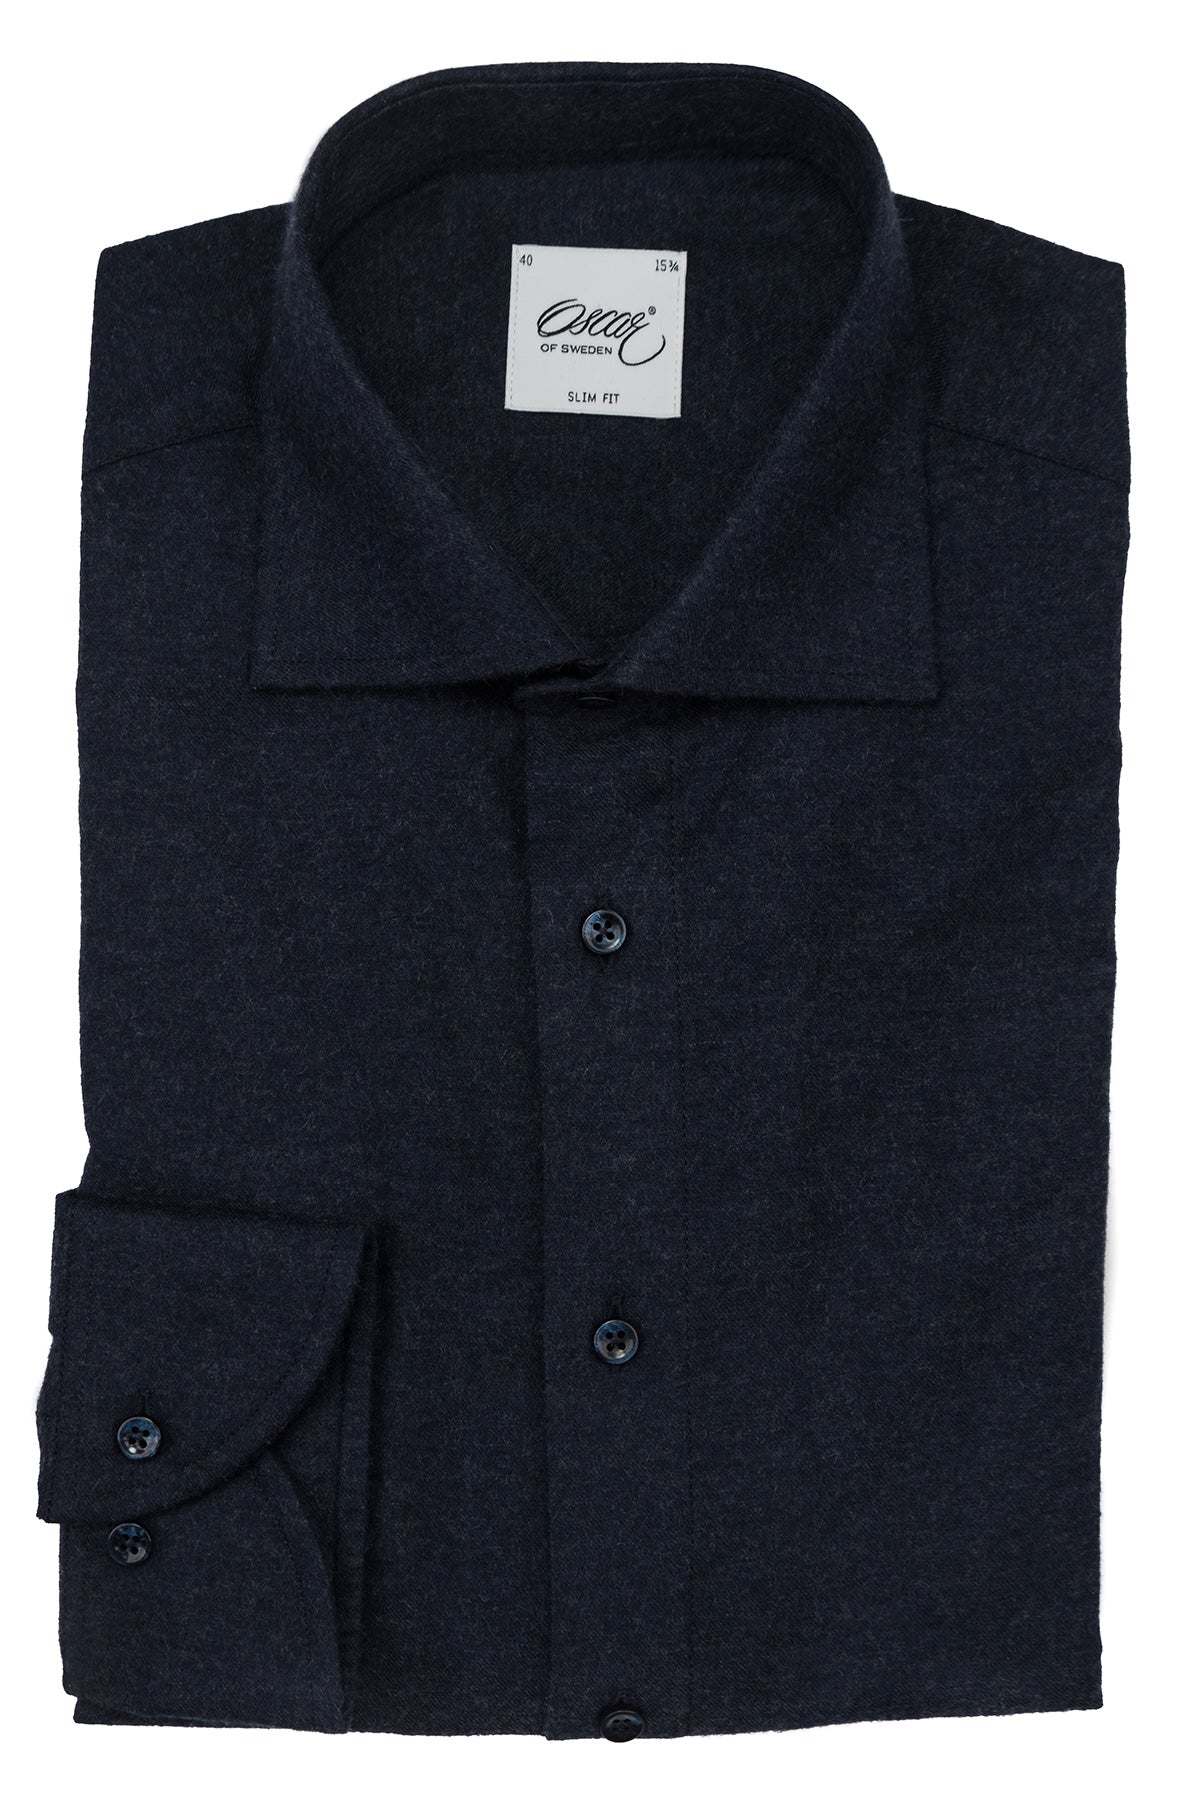 Navy blue cotton cashmere flannel regular fit shirt